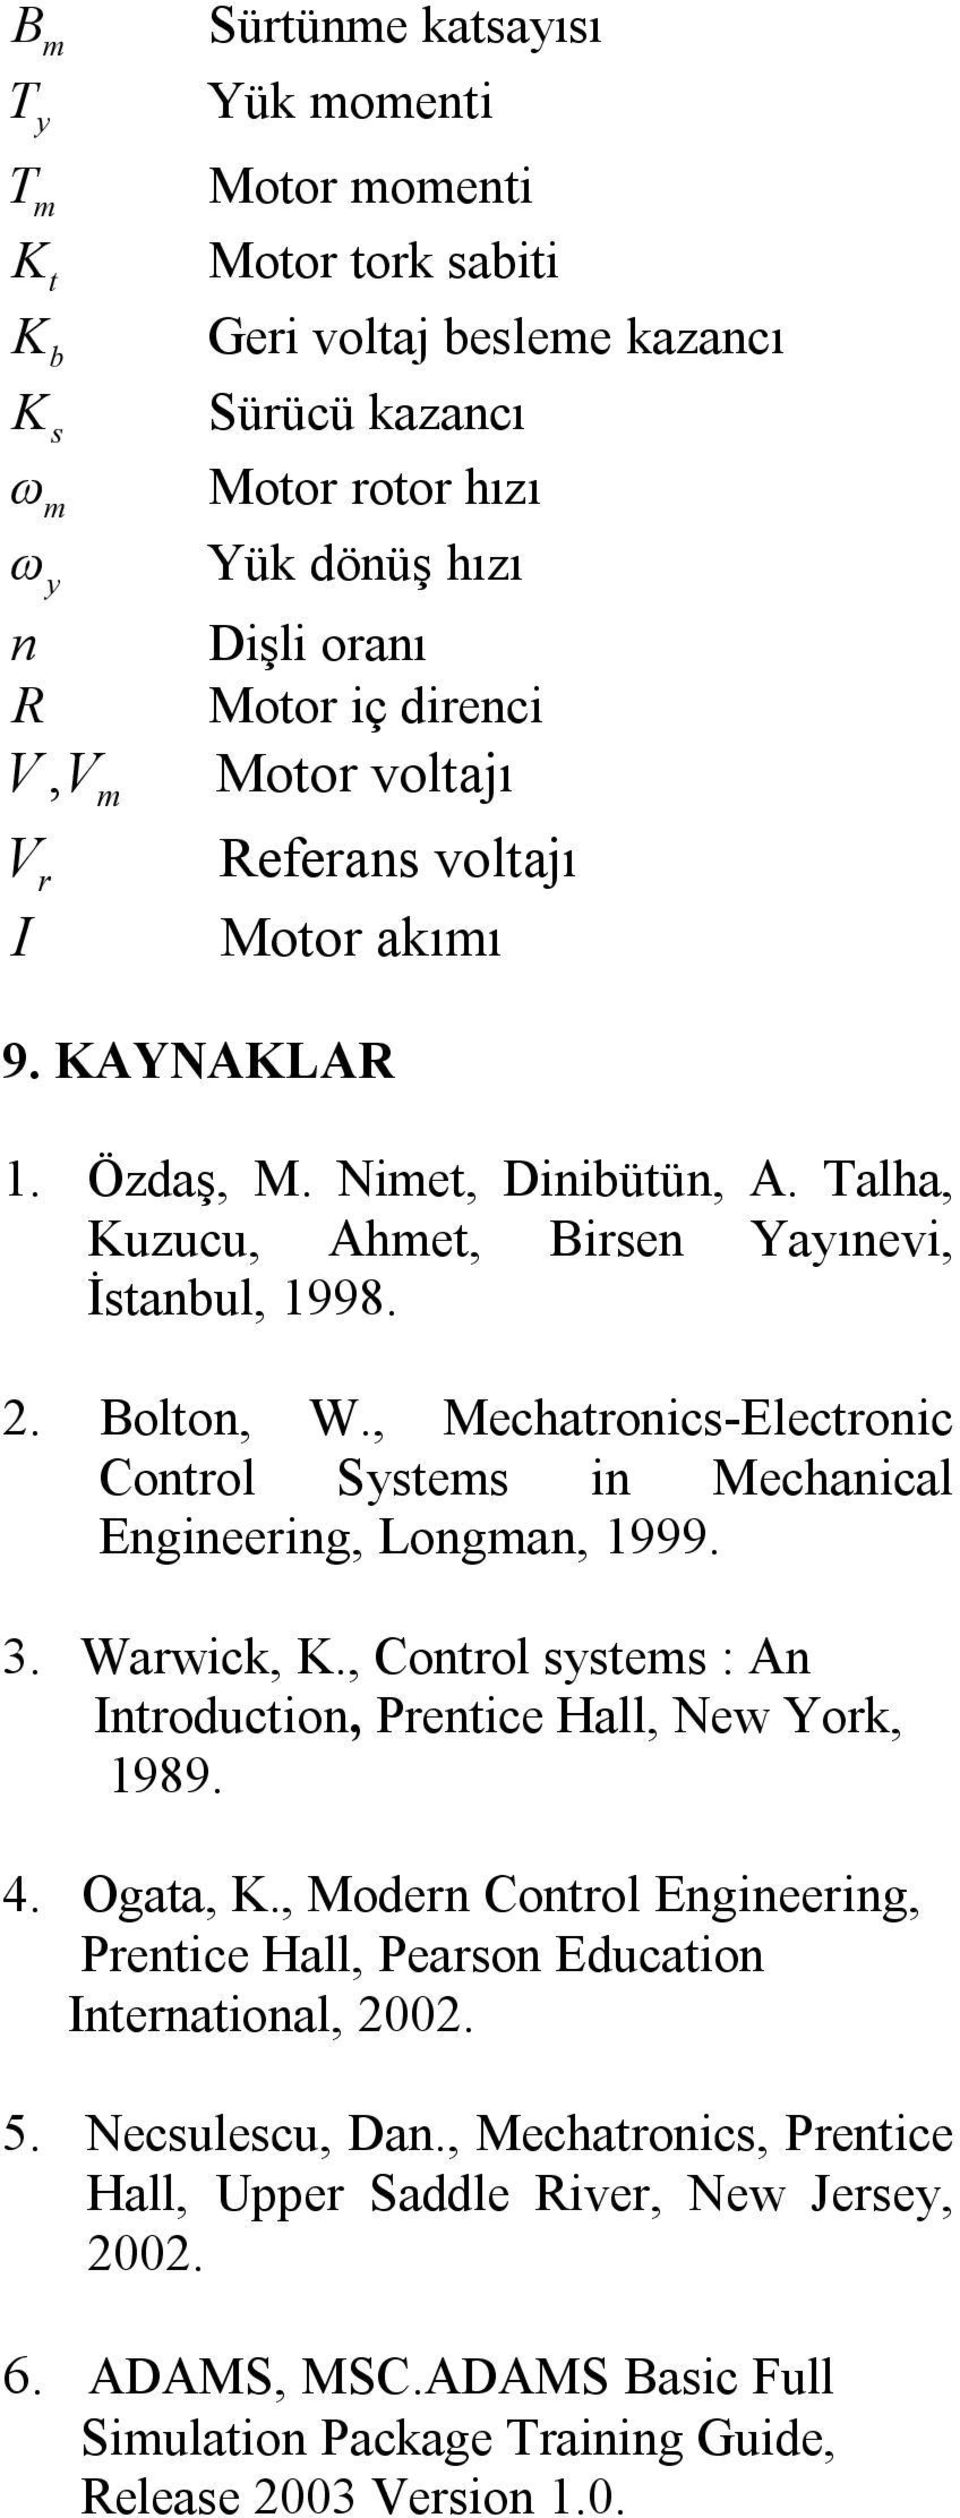 , Mechatronic-Electronic Control Ste in Mechanical Engineering, Longan, 999. 3. Warwick,., Control te : An Introduction, Prentice Hall, New York, 989. 4. Ogata,.